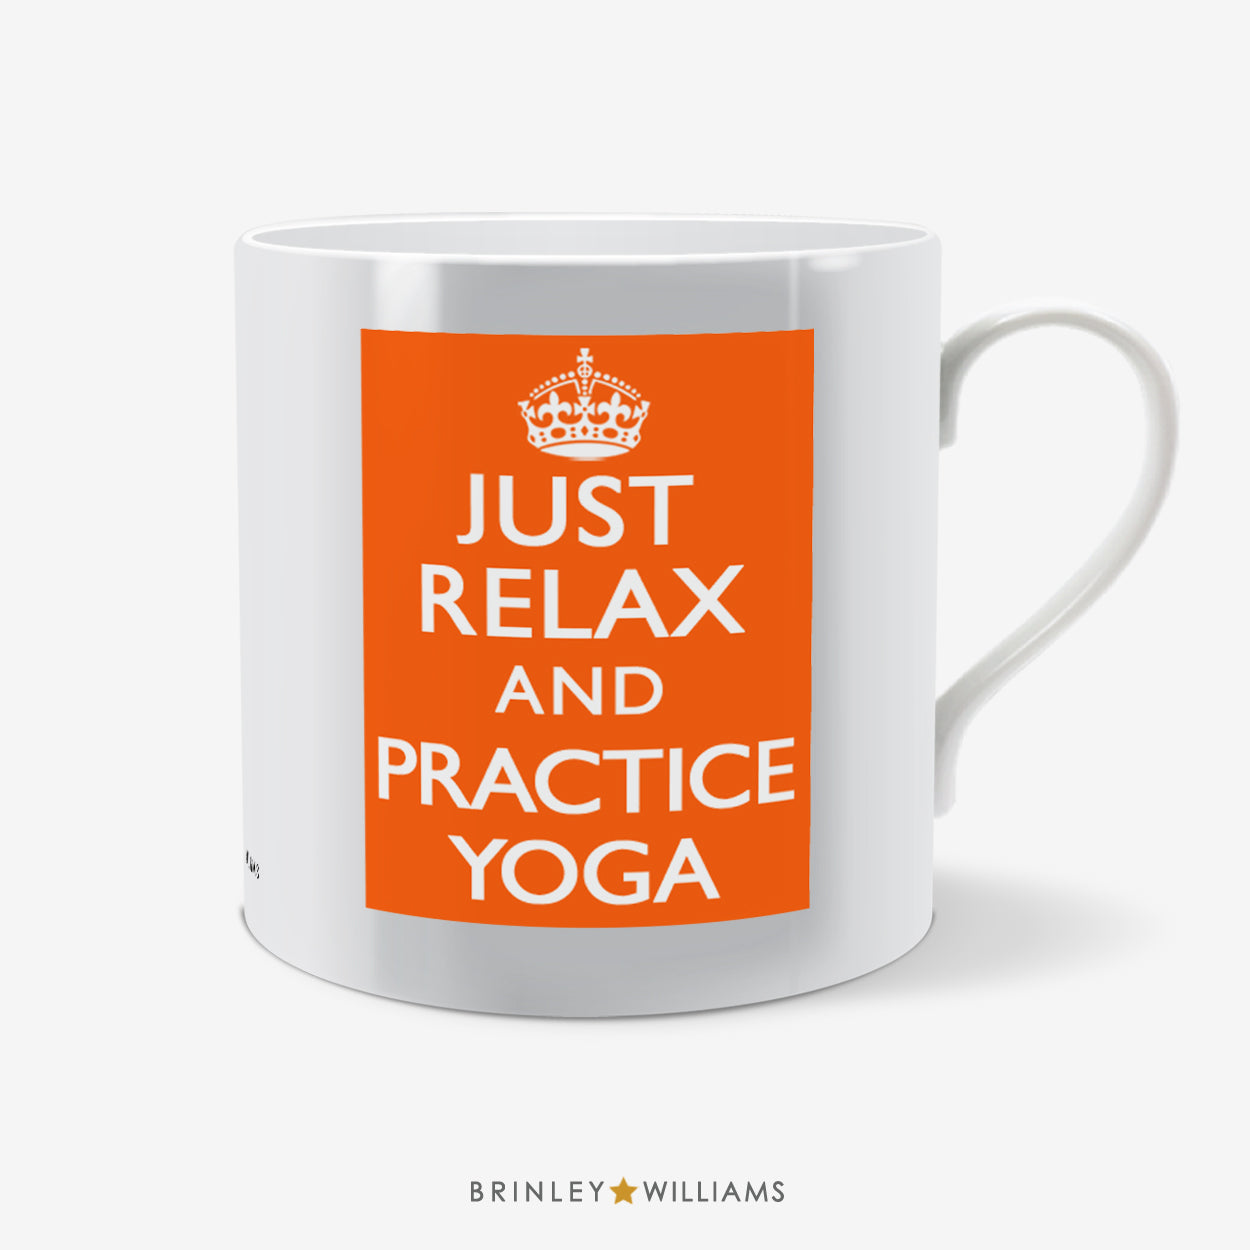 Just relax and practise Yoga Fun Mug - Orange